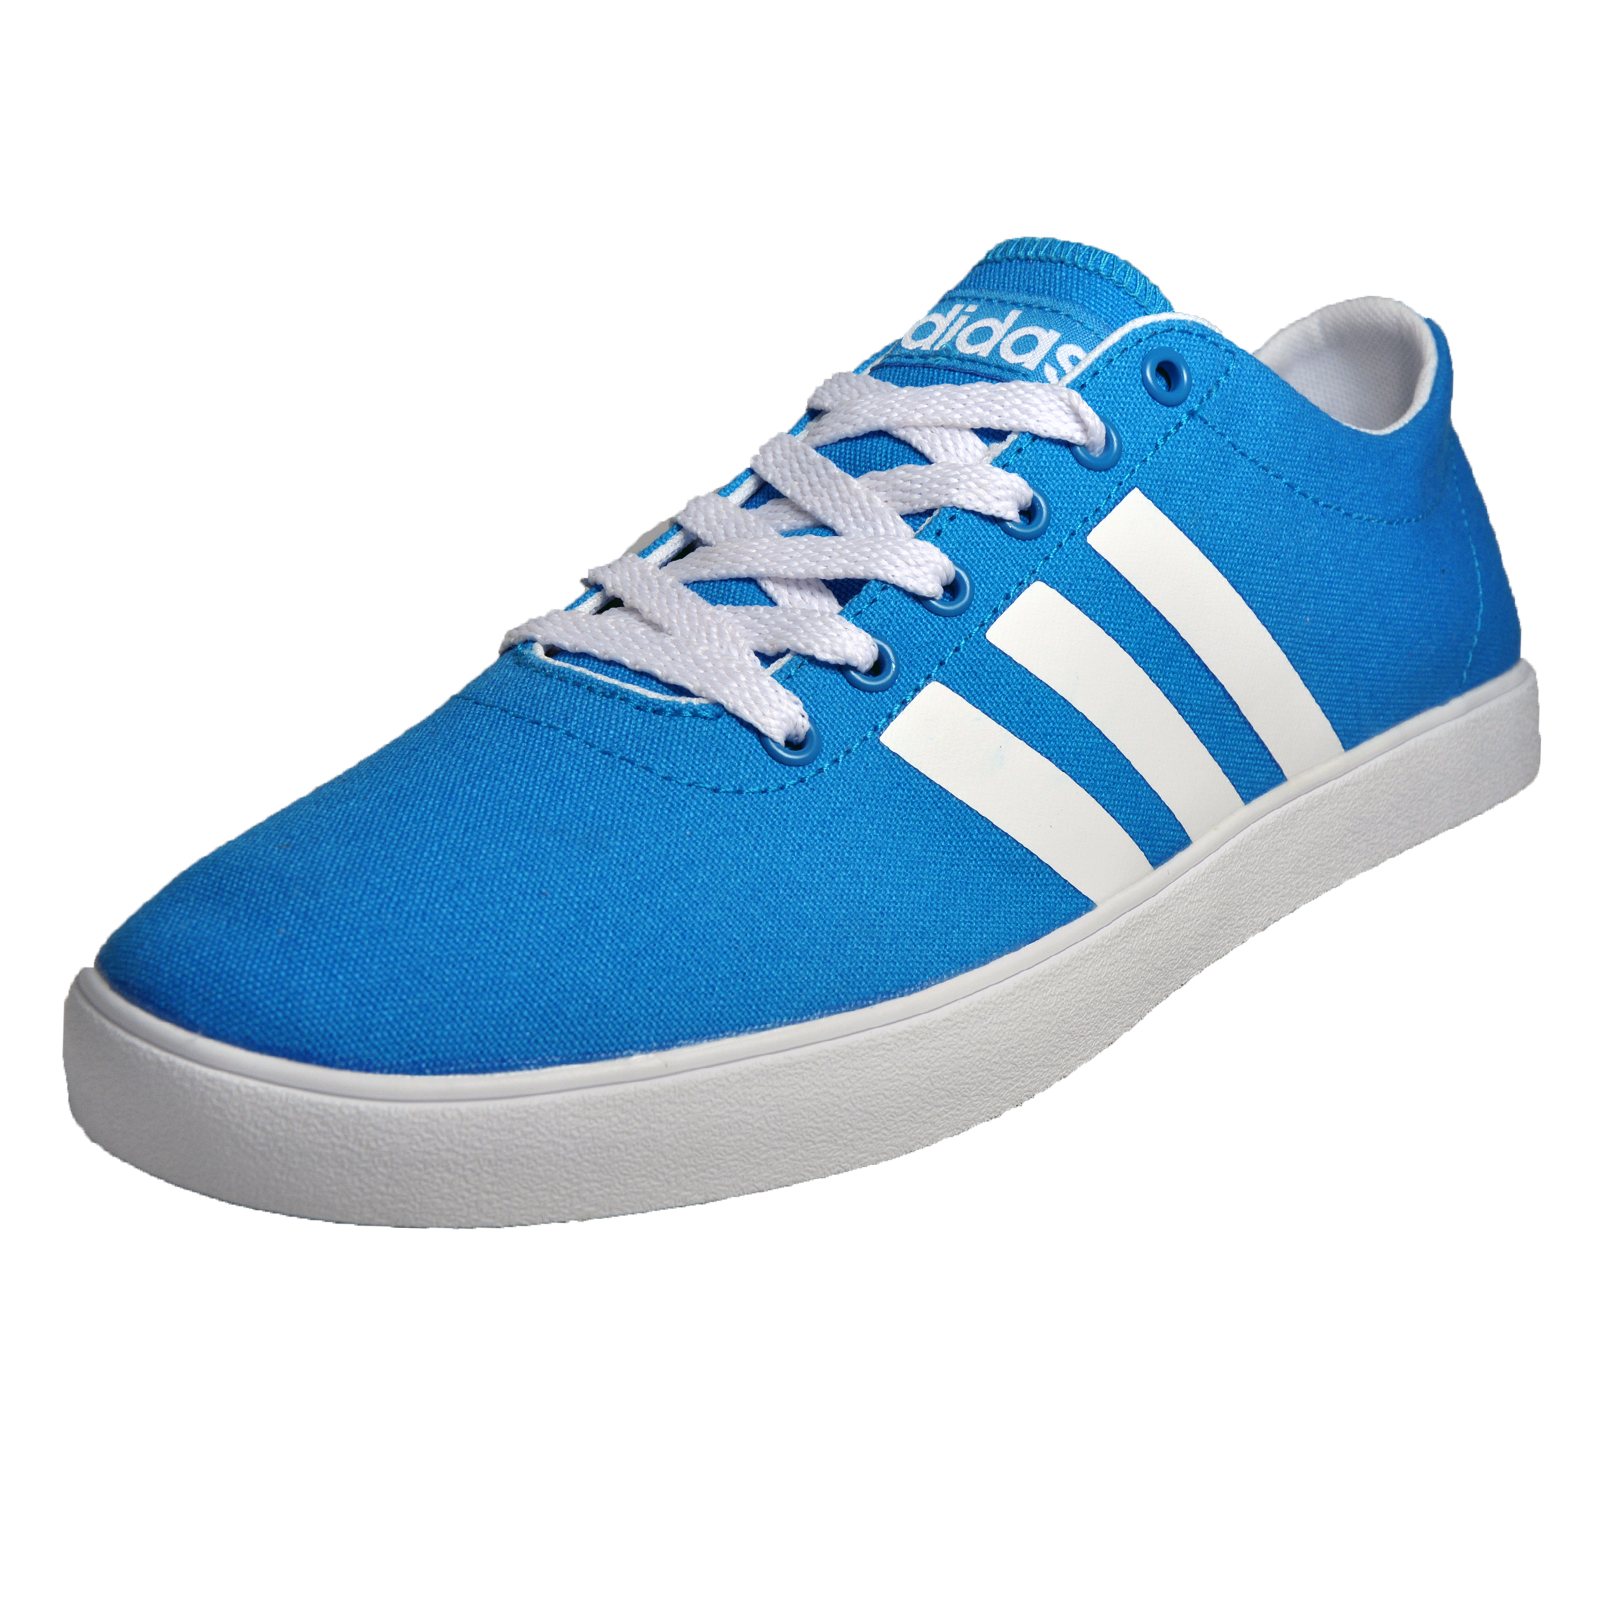 Adidas Neo Easy Vulc VS Mens Classic Casual Retro Plimsolls Blue | eBay